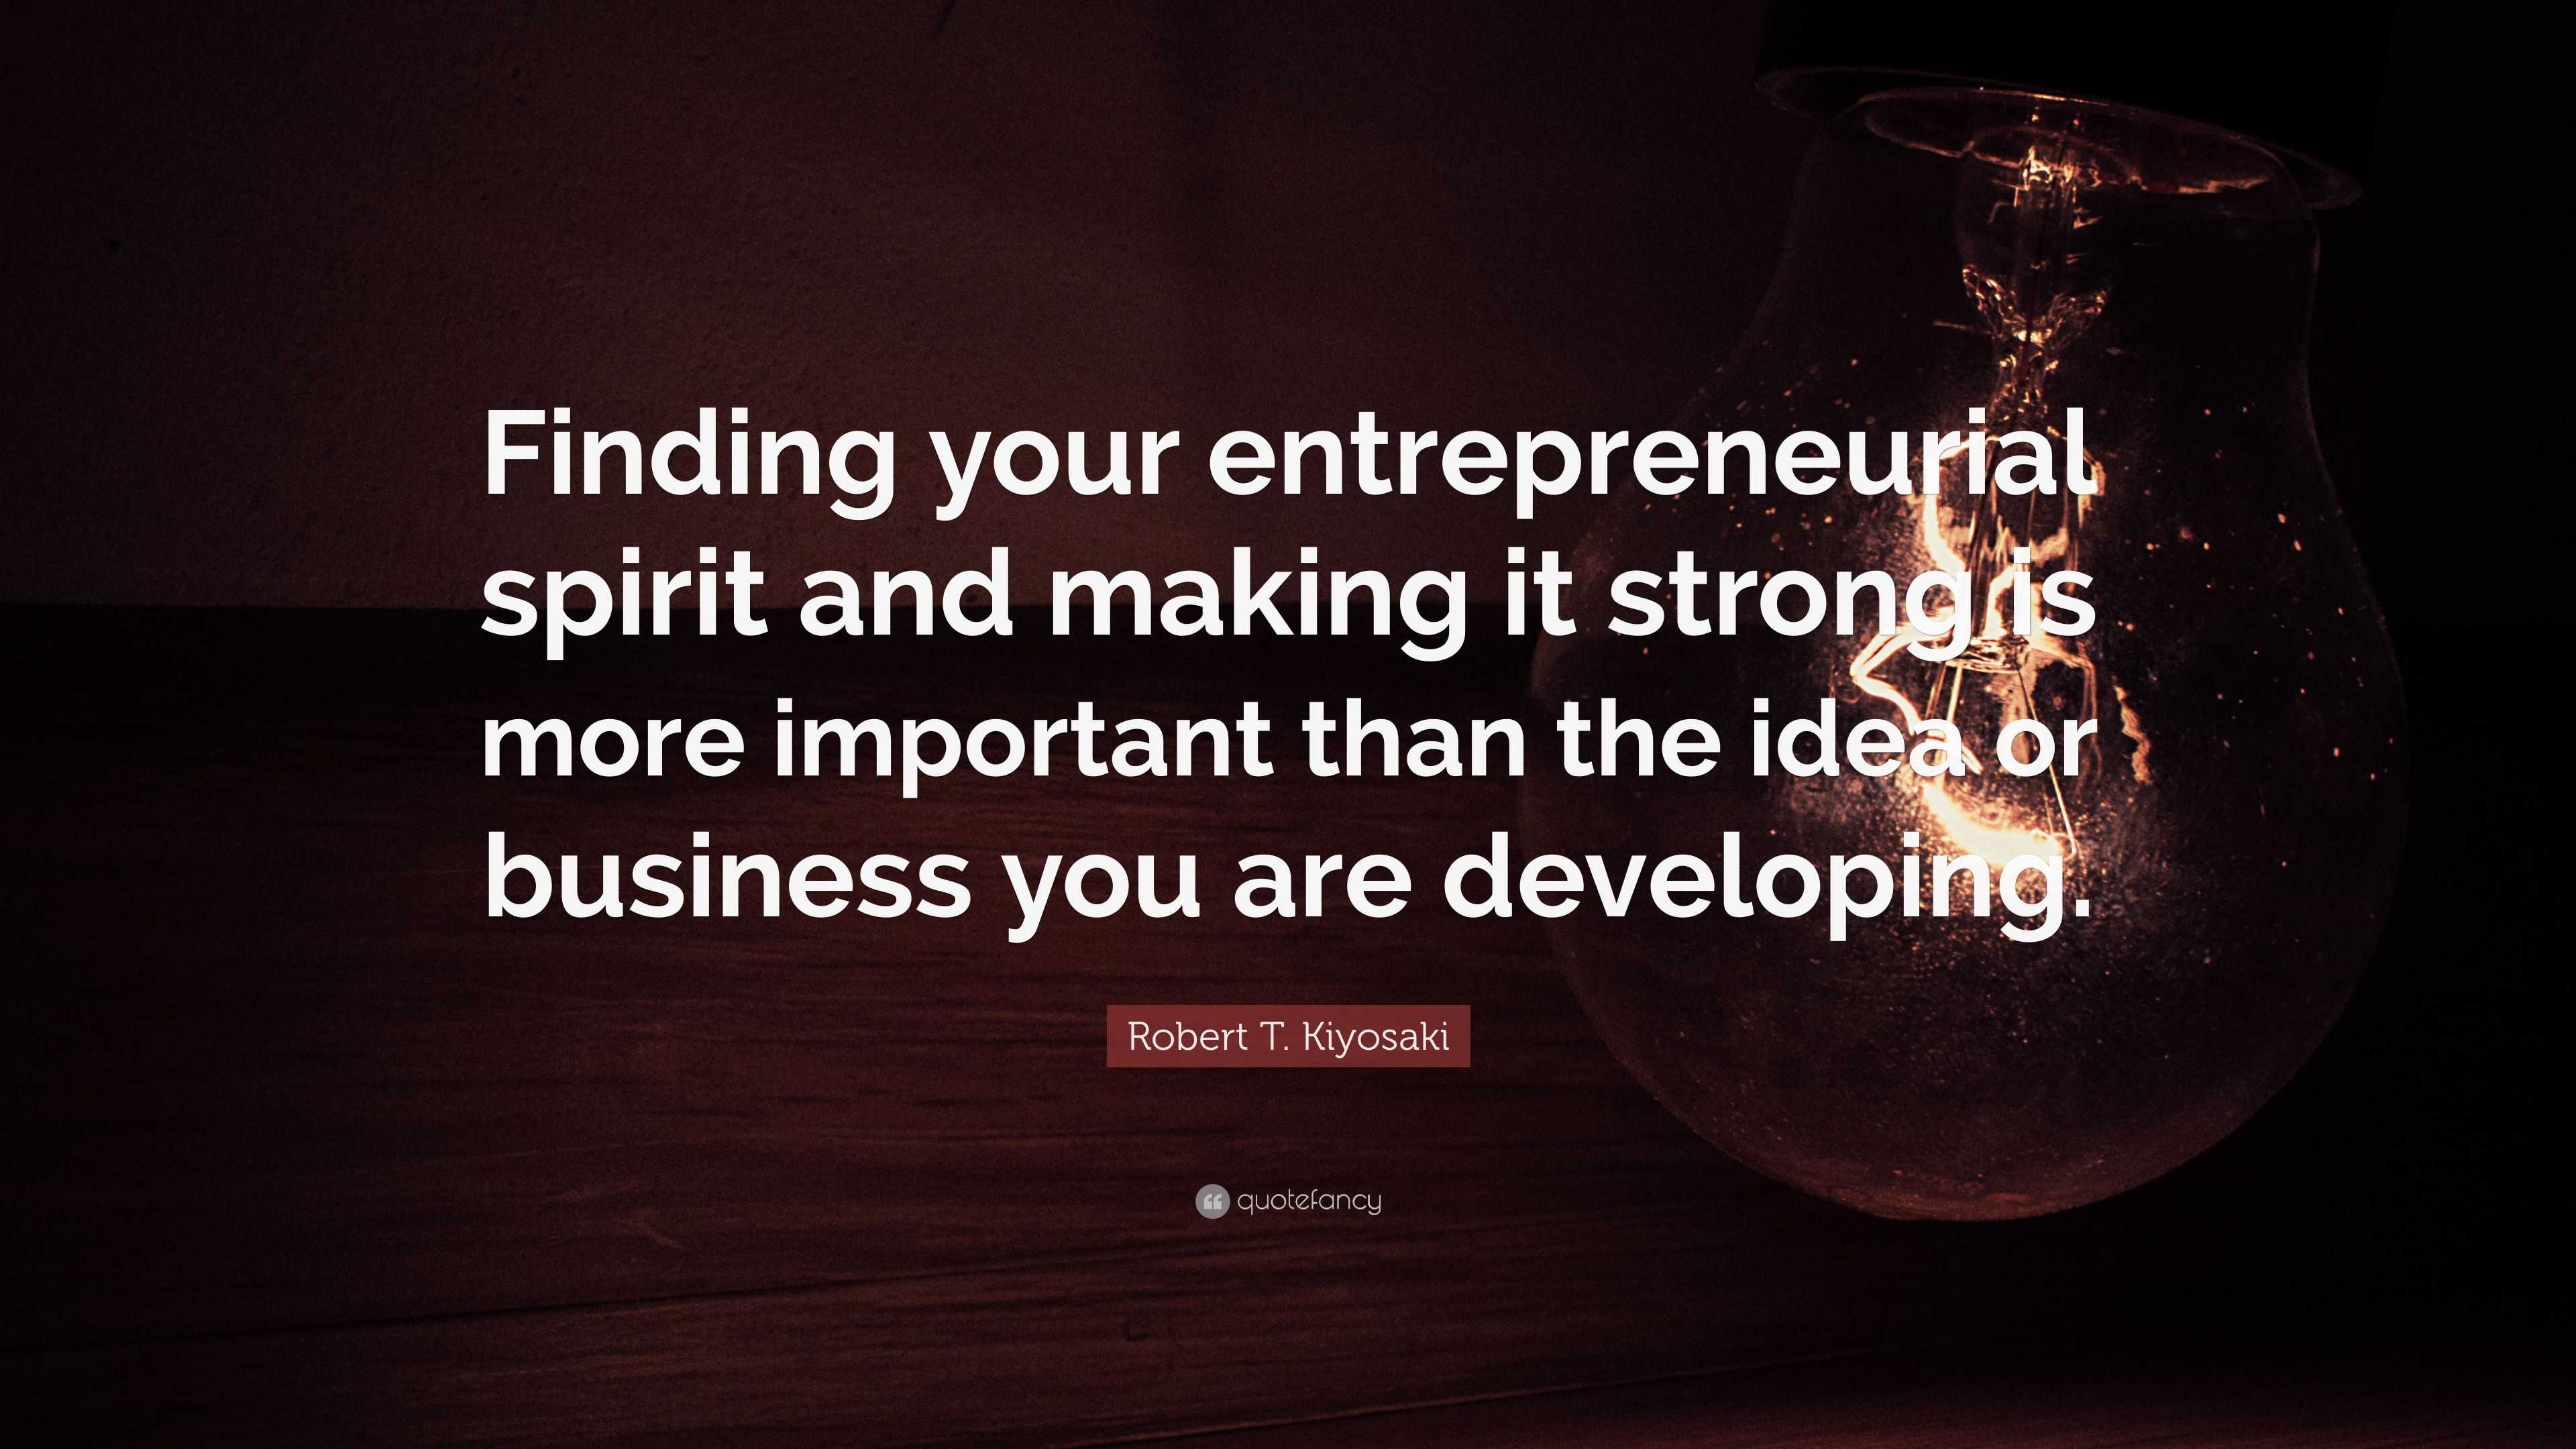 Robert T. Kiyosaki Quote: “Finding your entrepreneurial spirit and ...